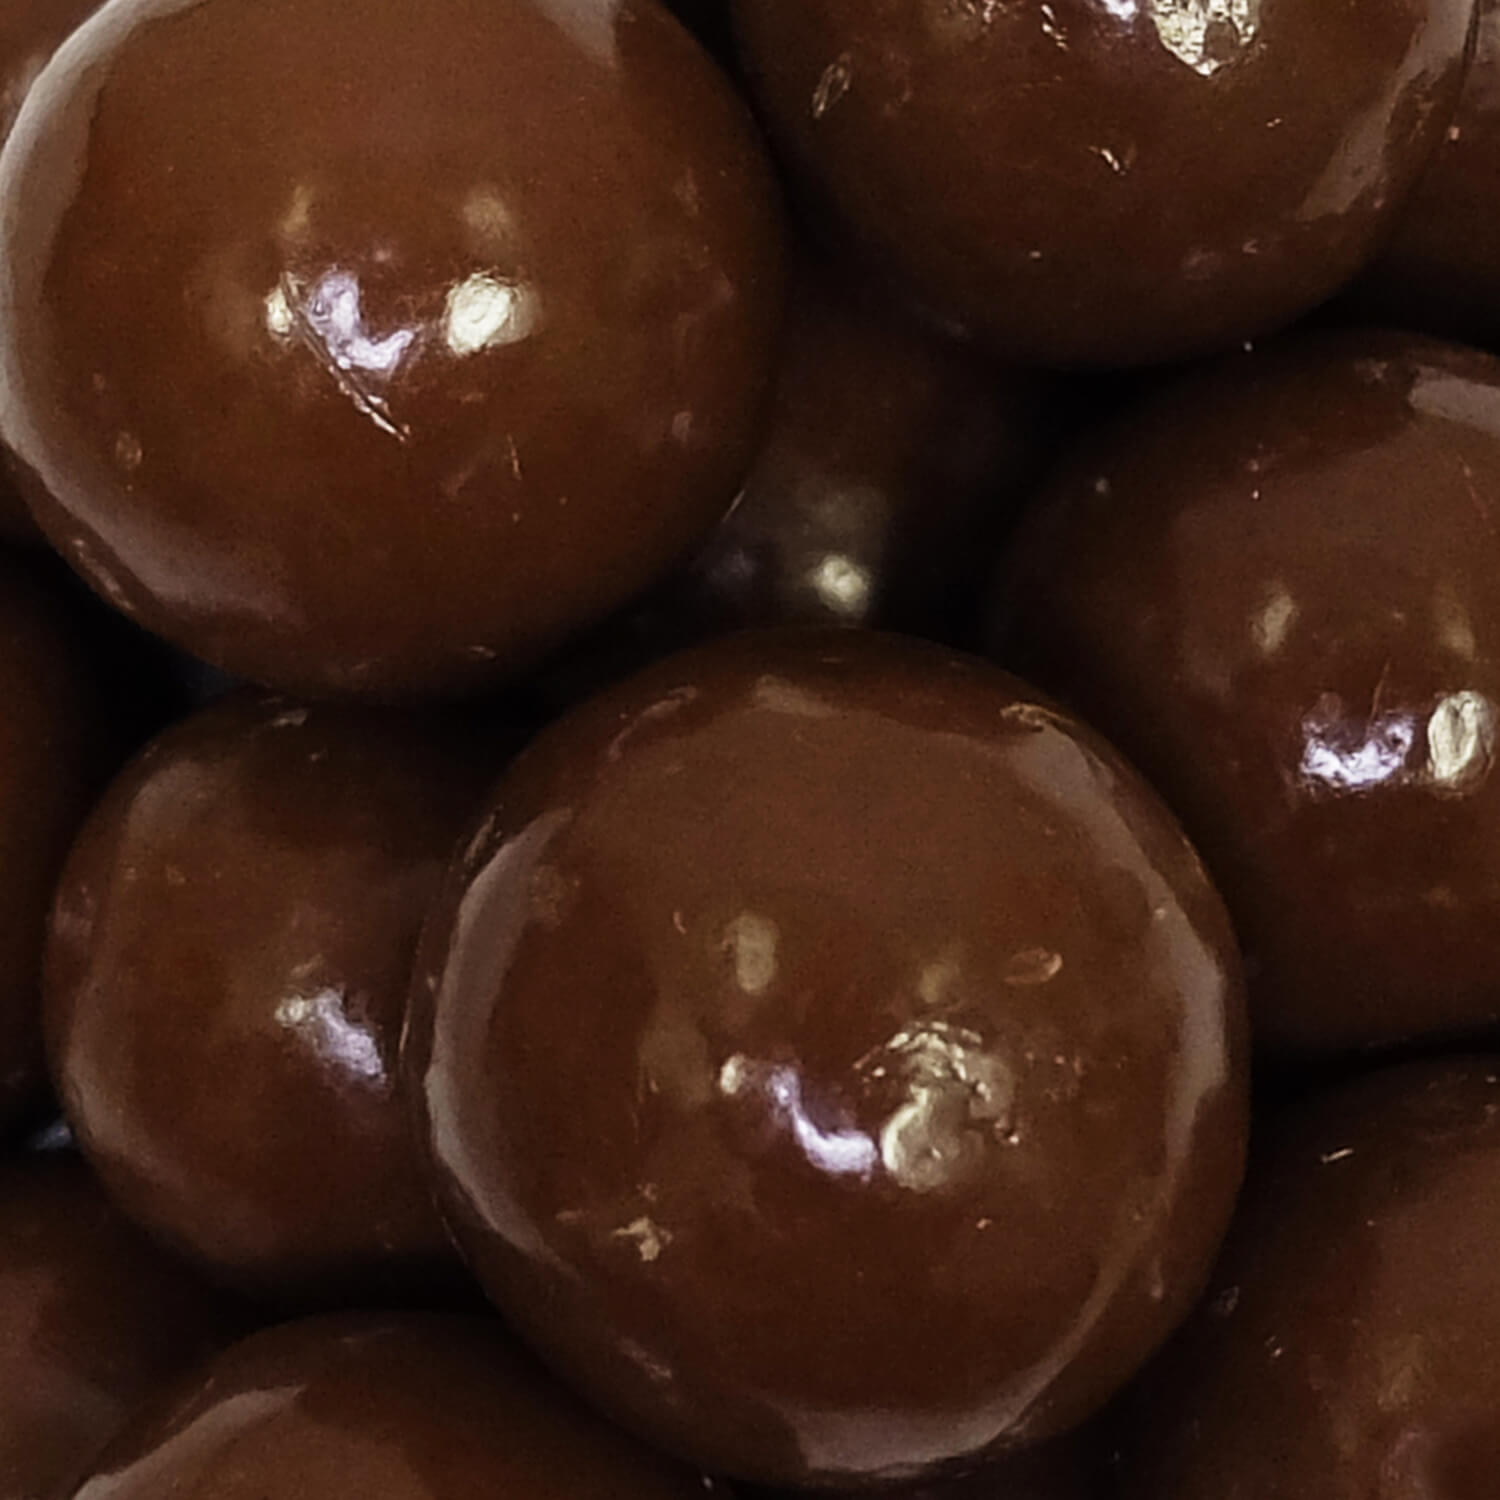 Milk chocolate malt balls